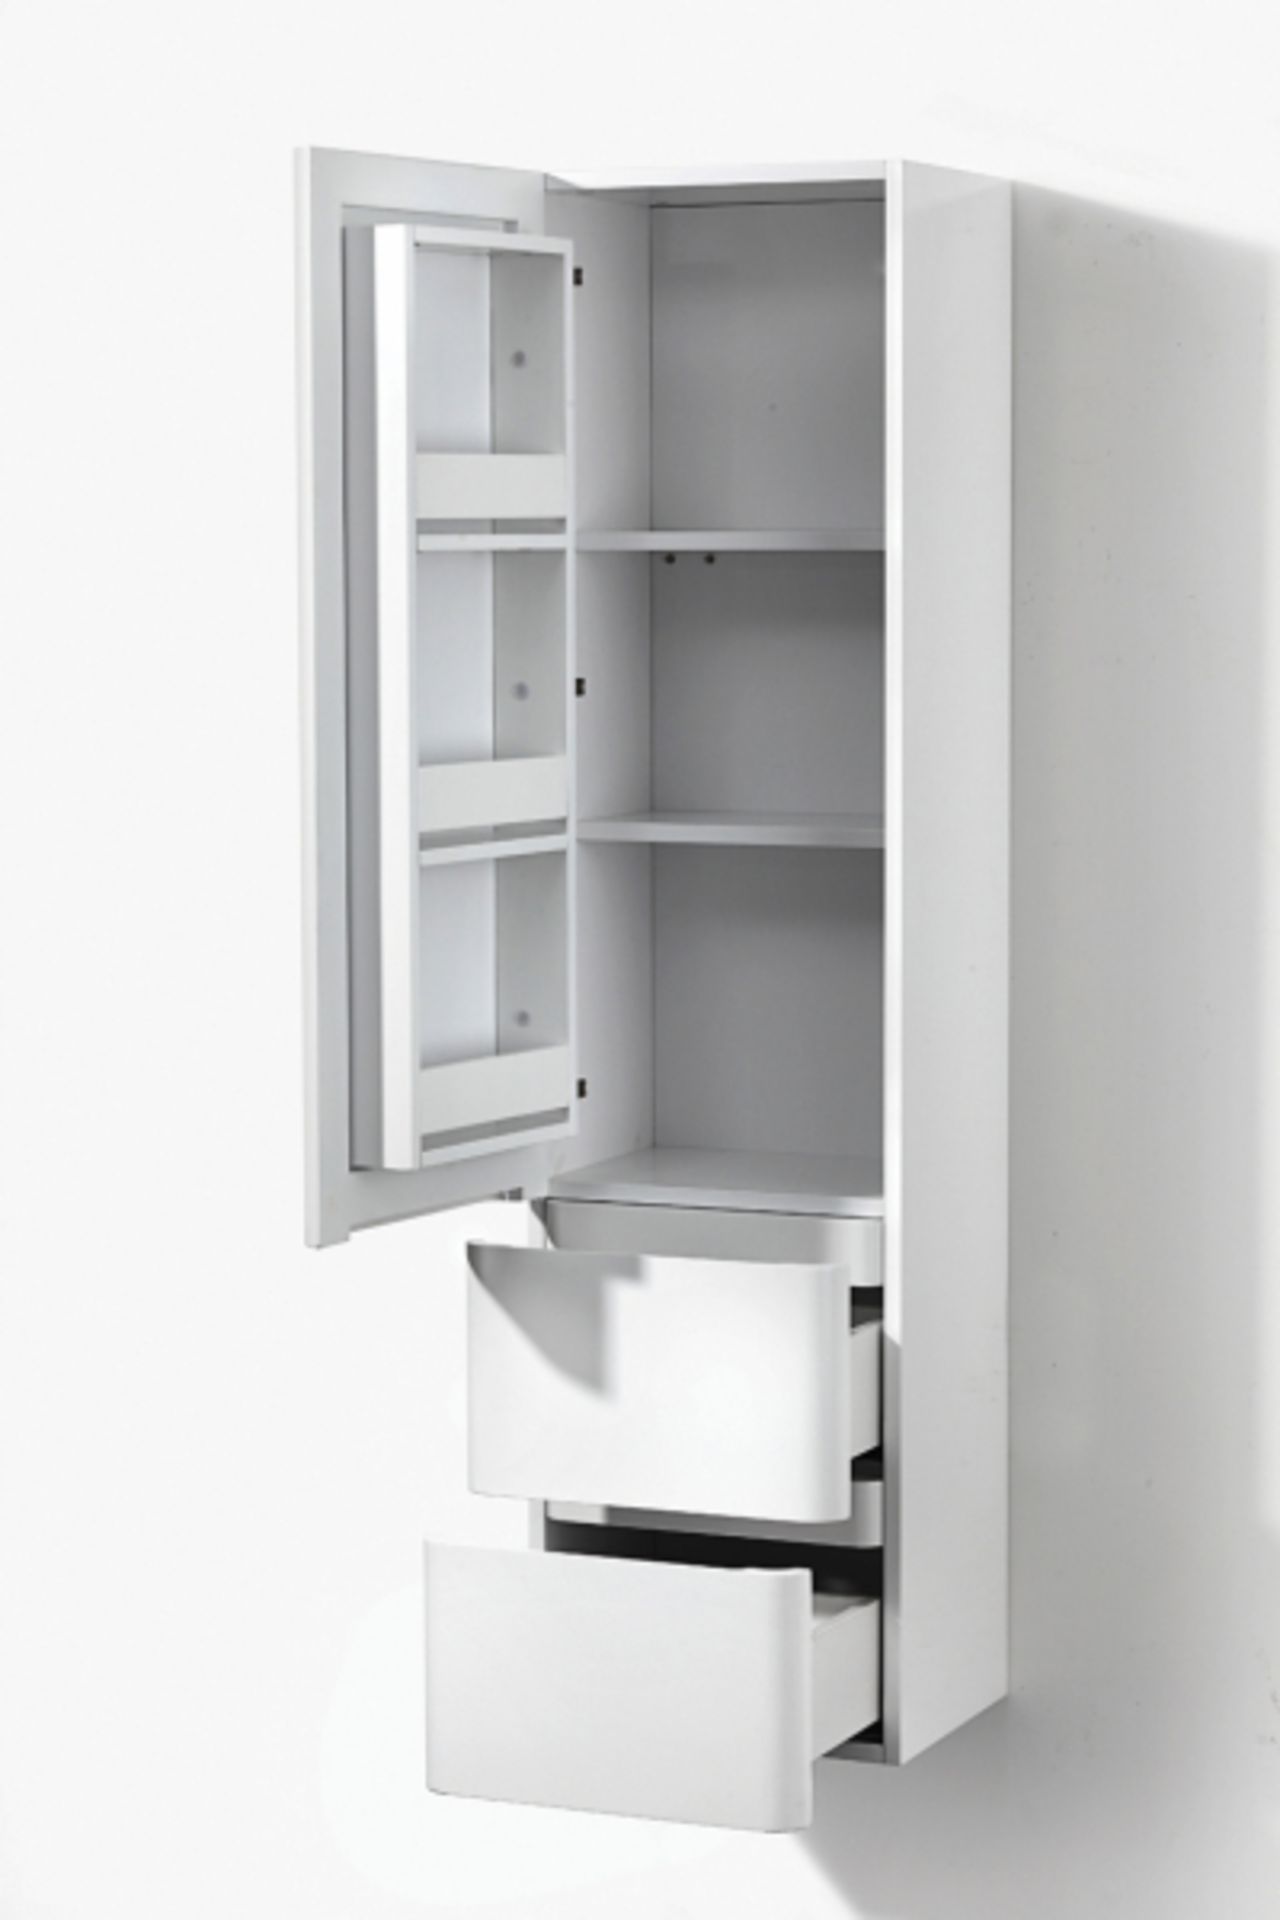 1 x White Gloss Storage Cabinet 155 - Image 2 of 3